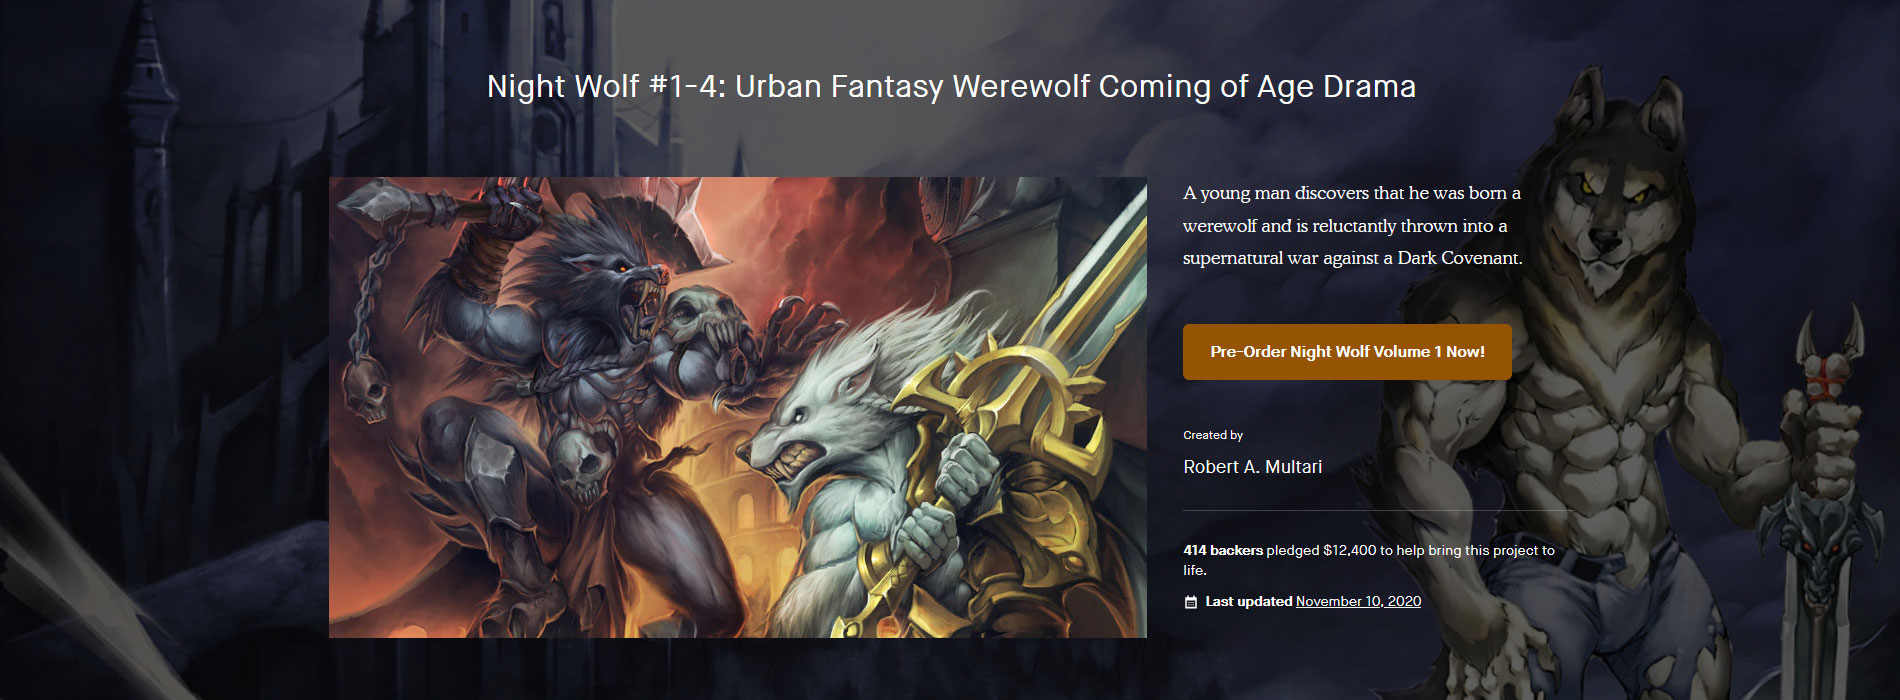 Night Wolf #1-4: Urban Fantasy Werewolf Coming of Age Drama Kickstarter